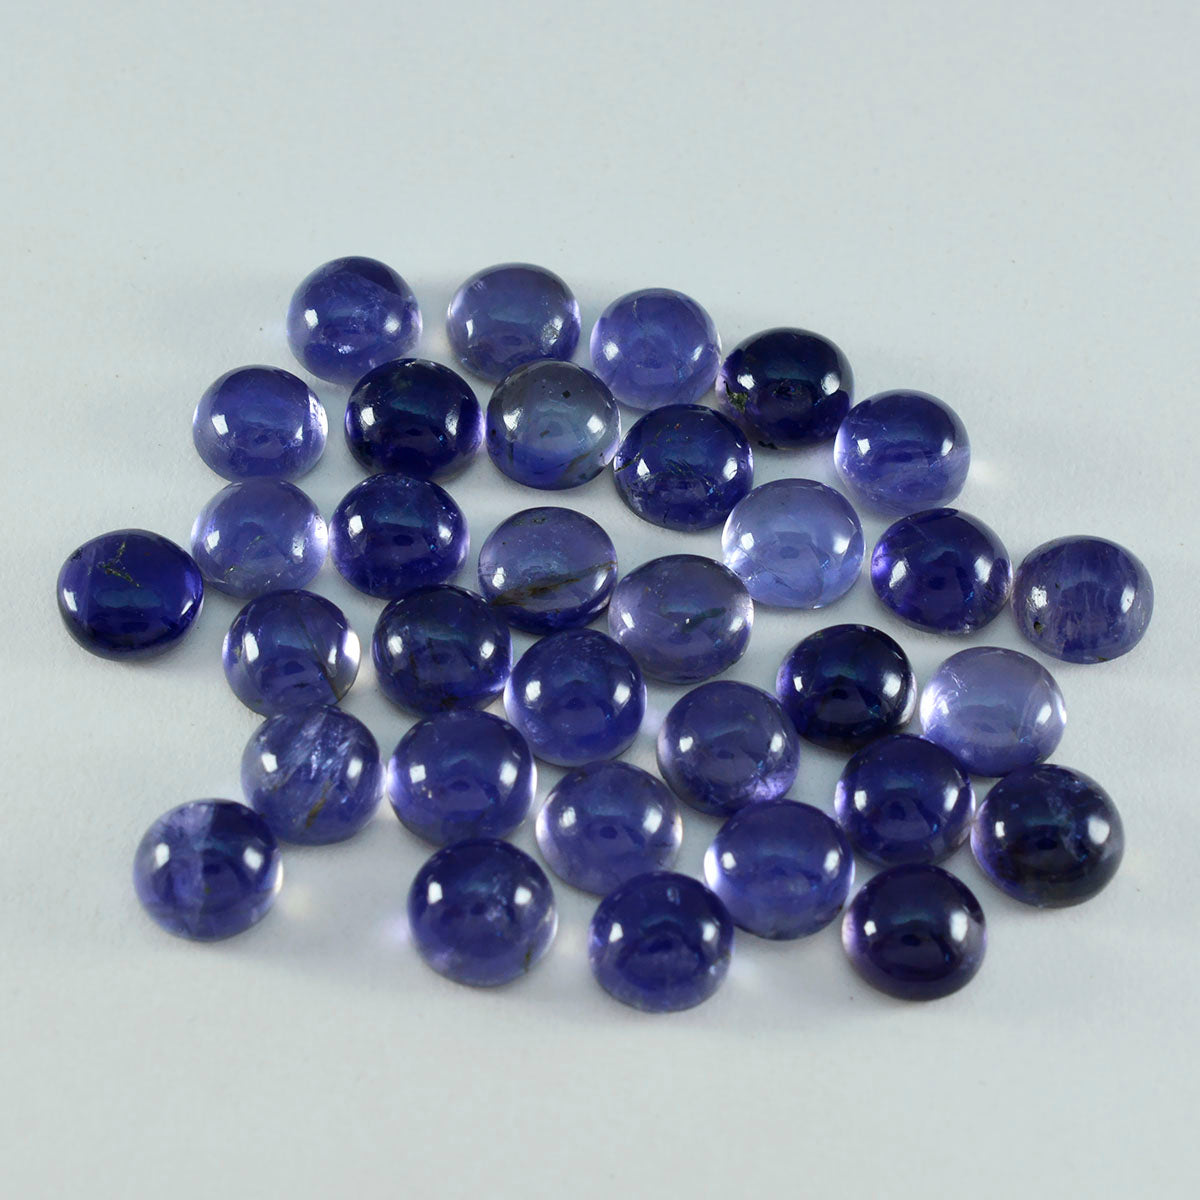 riyogems 1 st blå iolit cabochon 7x7 mm rund form a+ kvalitet lös pärla